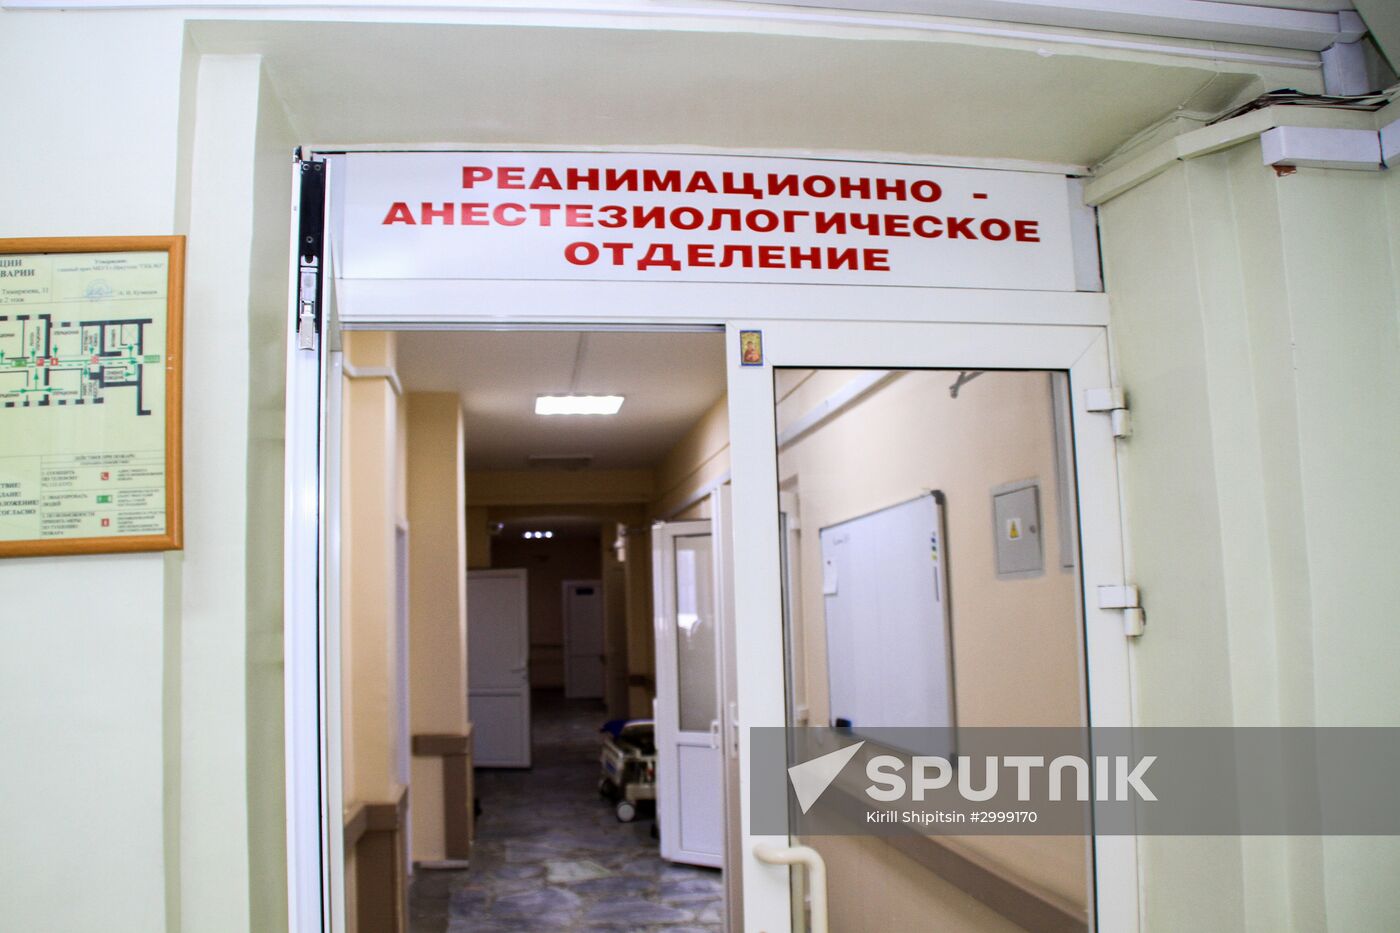 Irkutsk City Clinical Hospital #3